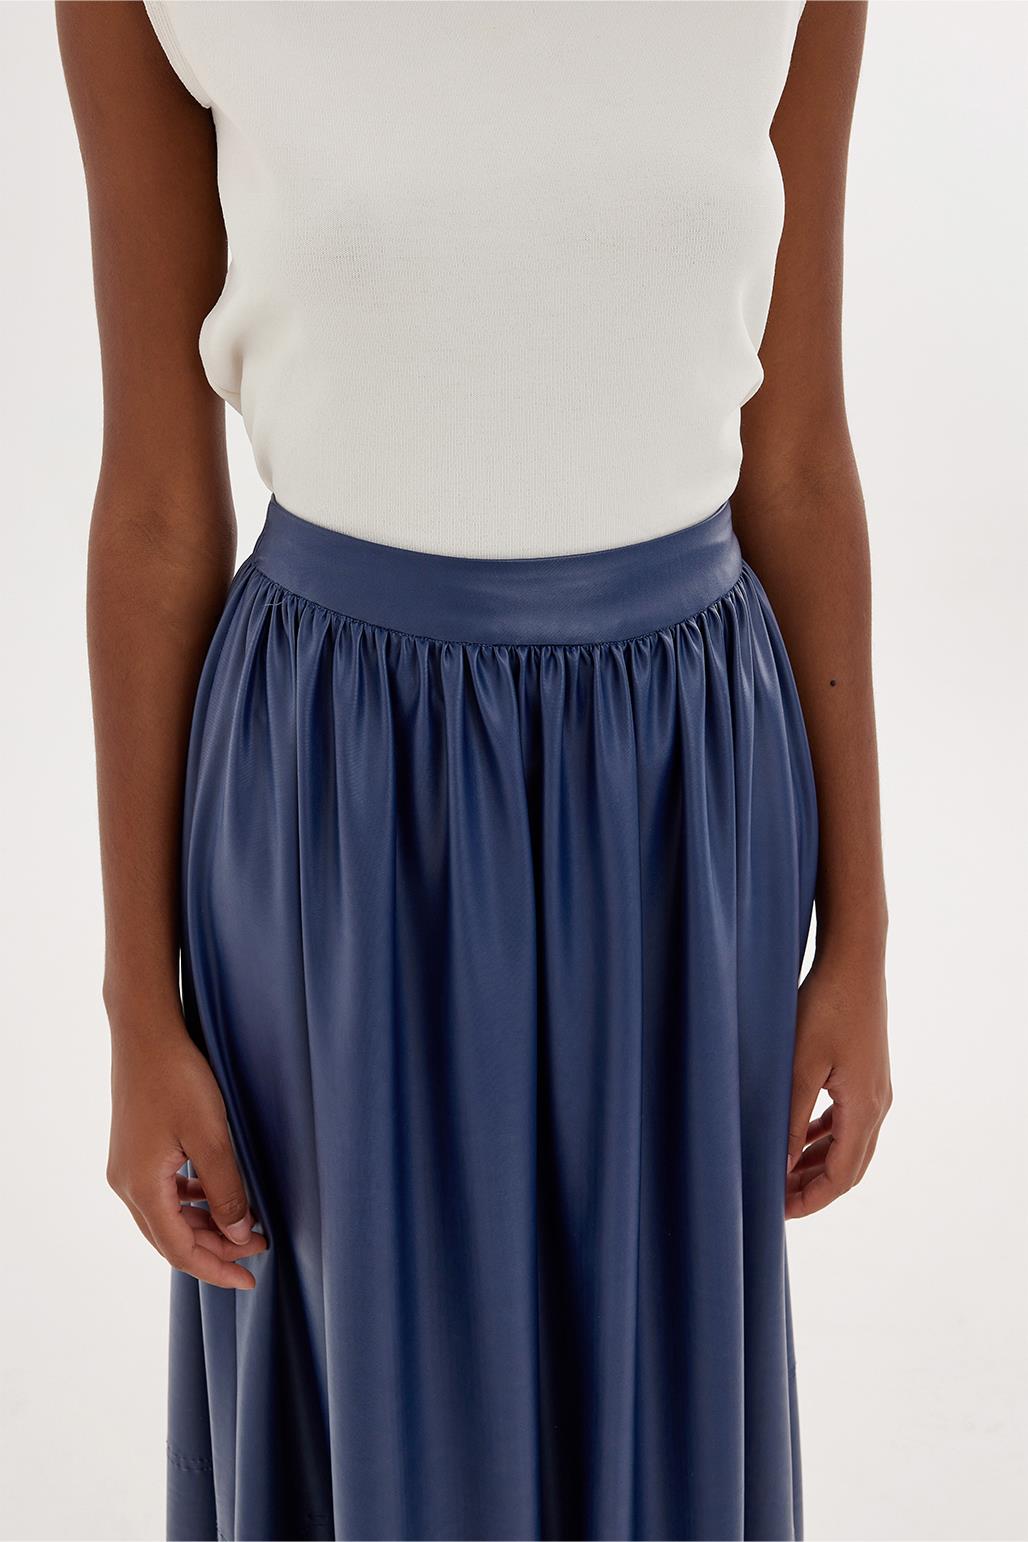 Shirred Soft Leather Skirt Navy Blue